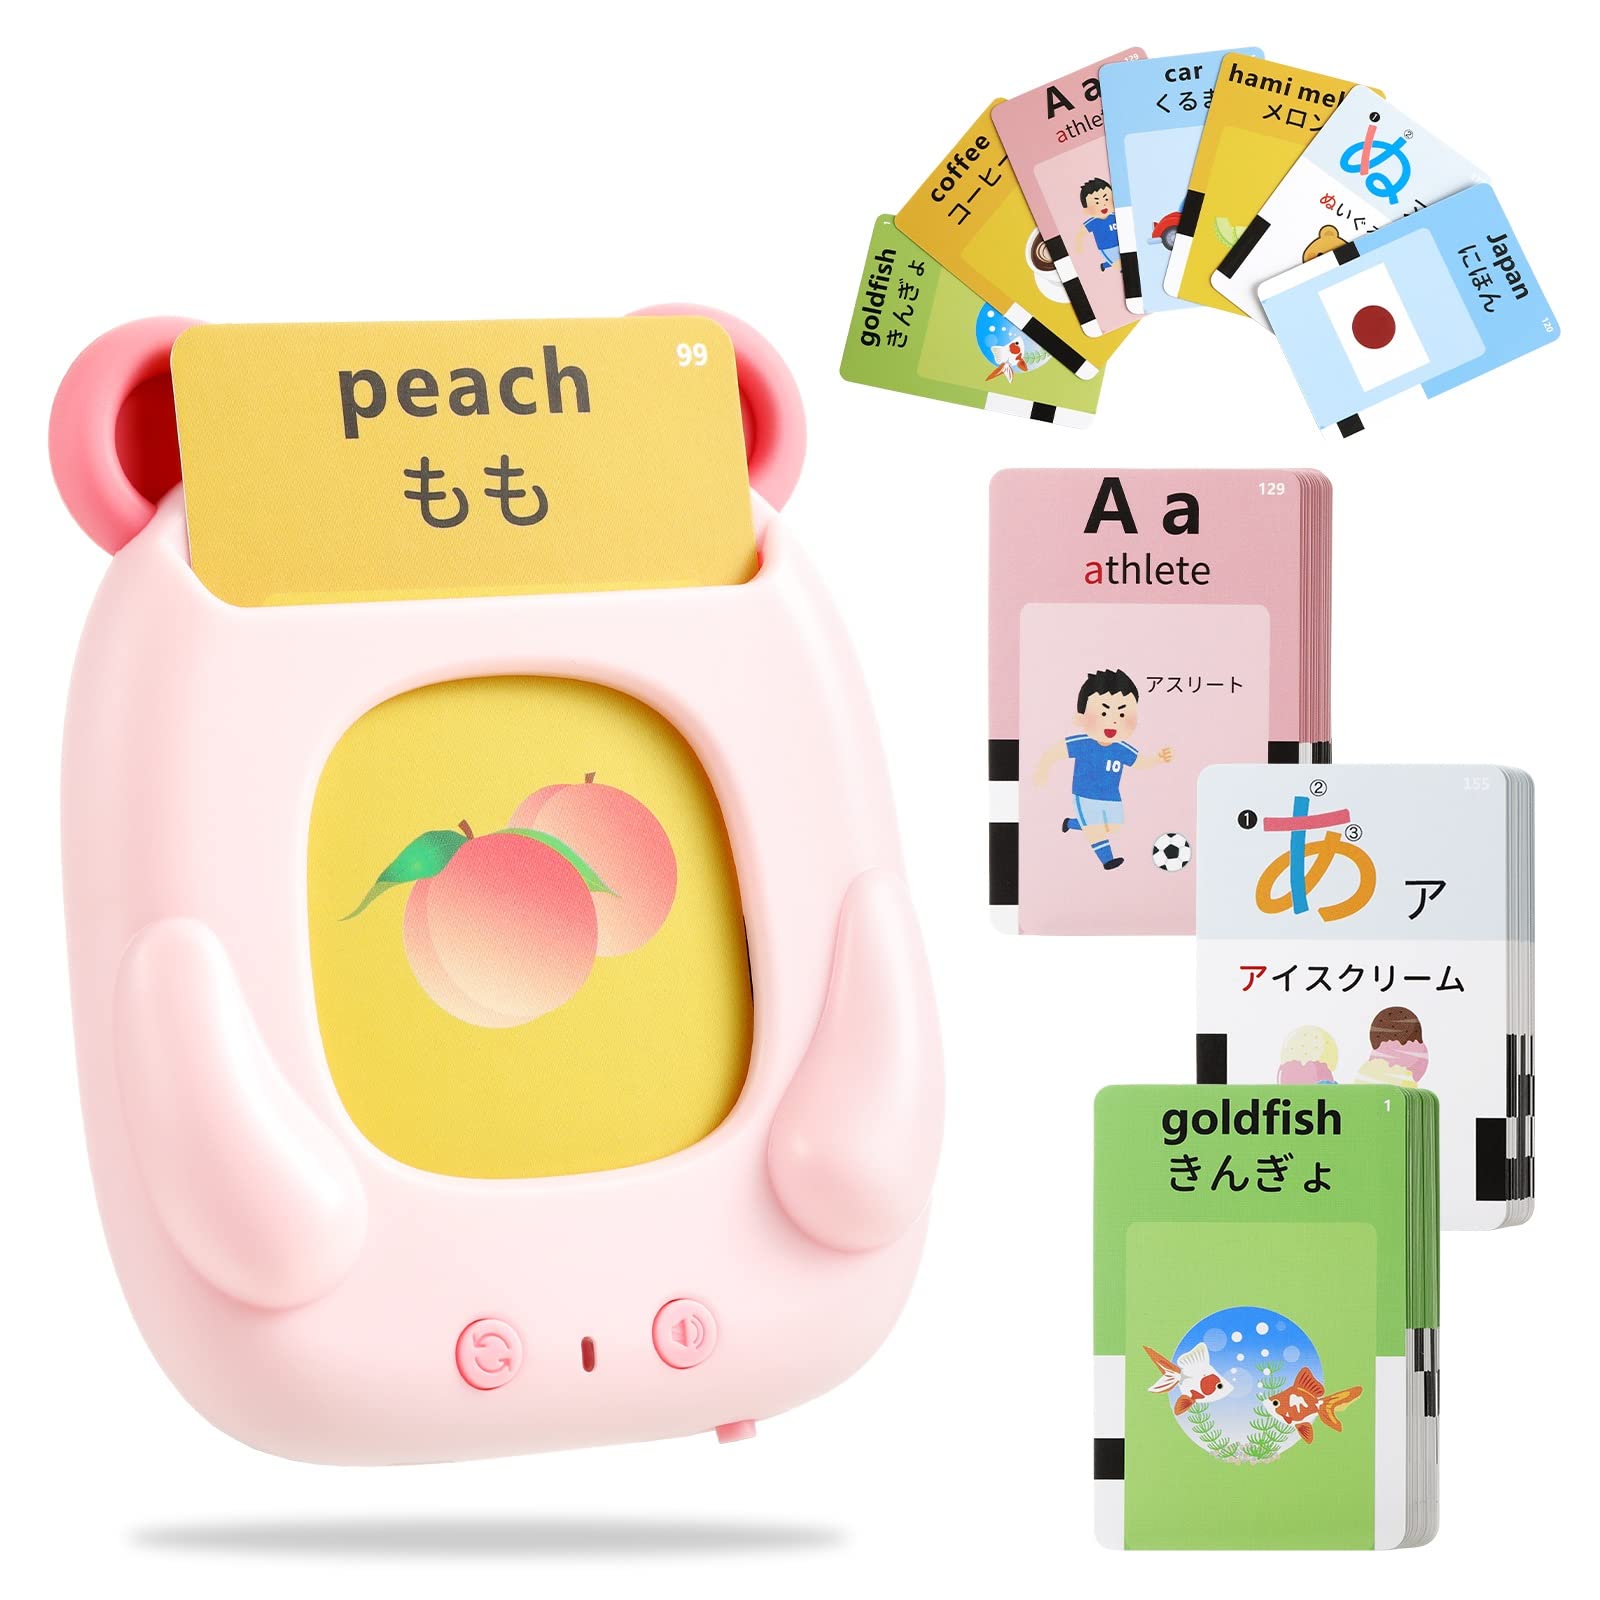 AGPTEK おしゃべりことばカードマシーン 日英両語対応 フラッシュカード 100枚の両面カード 教育啓発 インテリジェント 英語と日本語の単